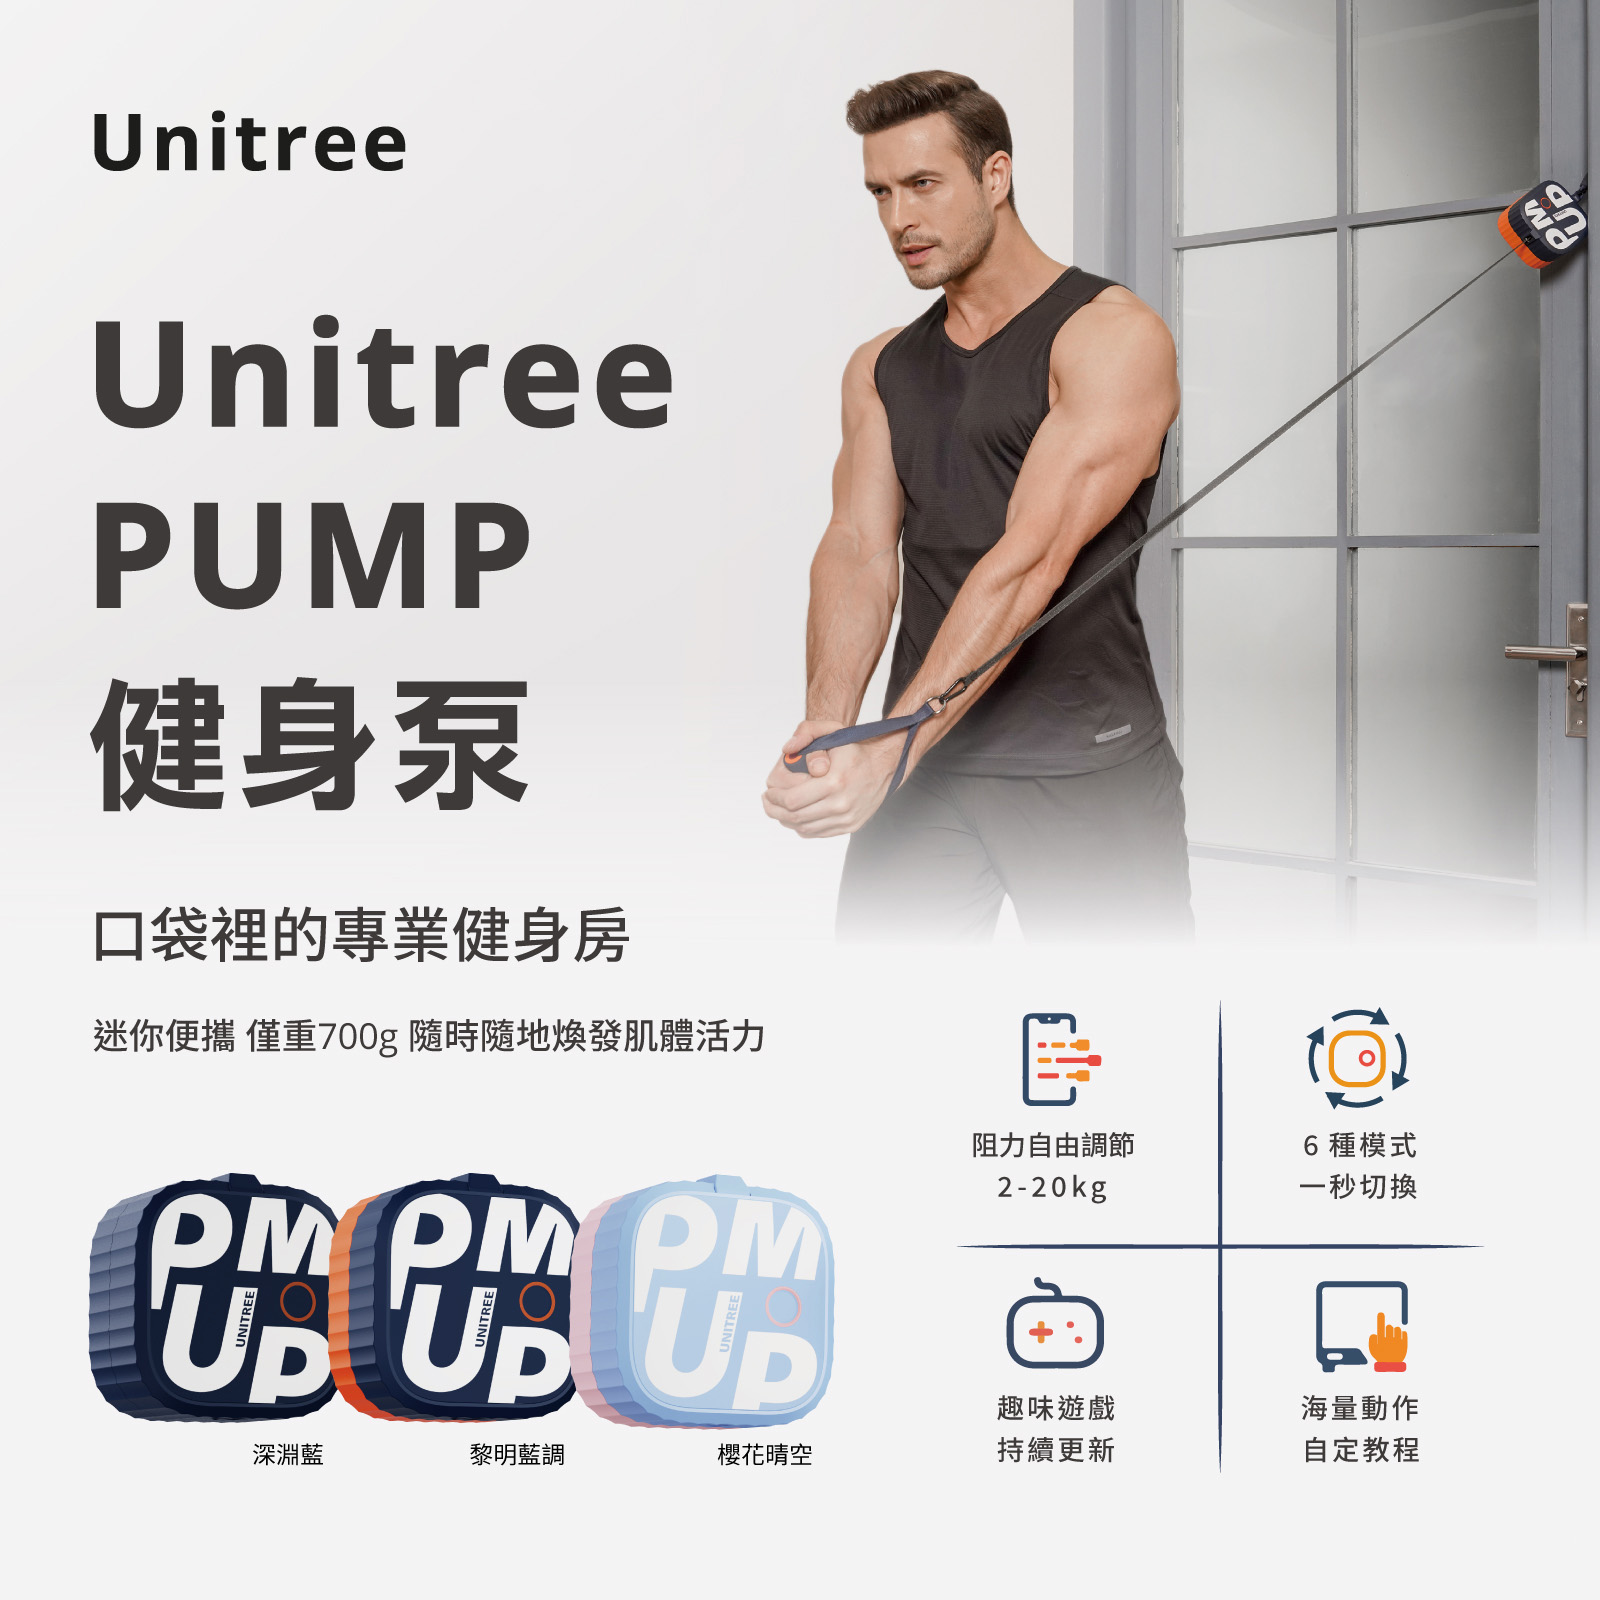 UNITREE PUMP 20KG負重健身訓練泵 - 藍橙色 | 2-20公斤阻力調節 | 僅重700g | 香港行貨產品介紹圖Outlet Express生活百貨城